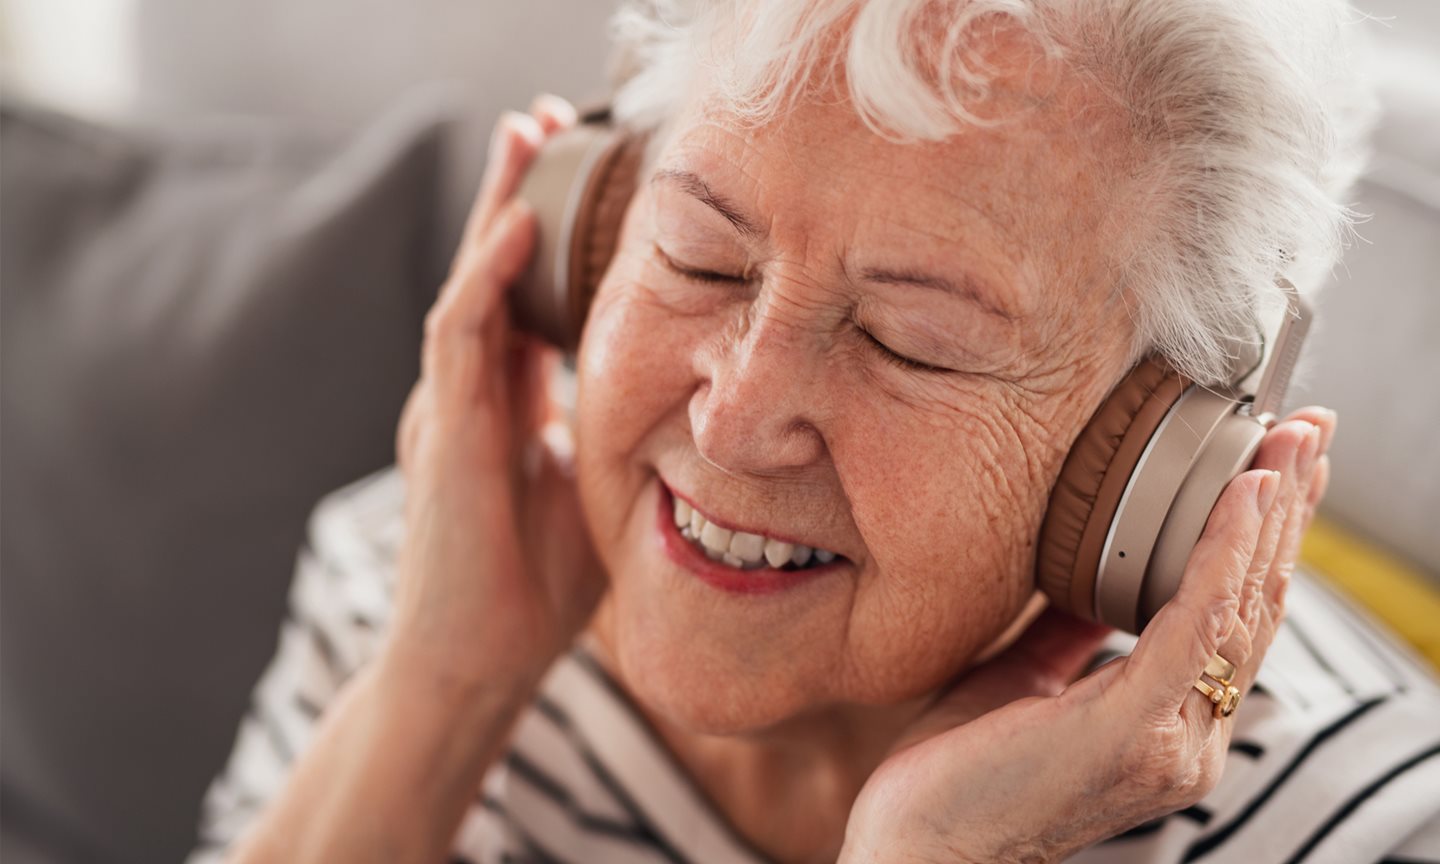 A resident listening to music through headphones.